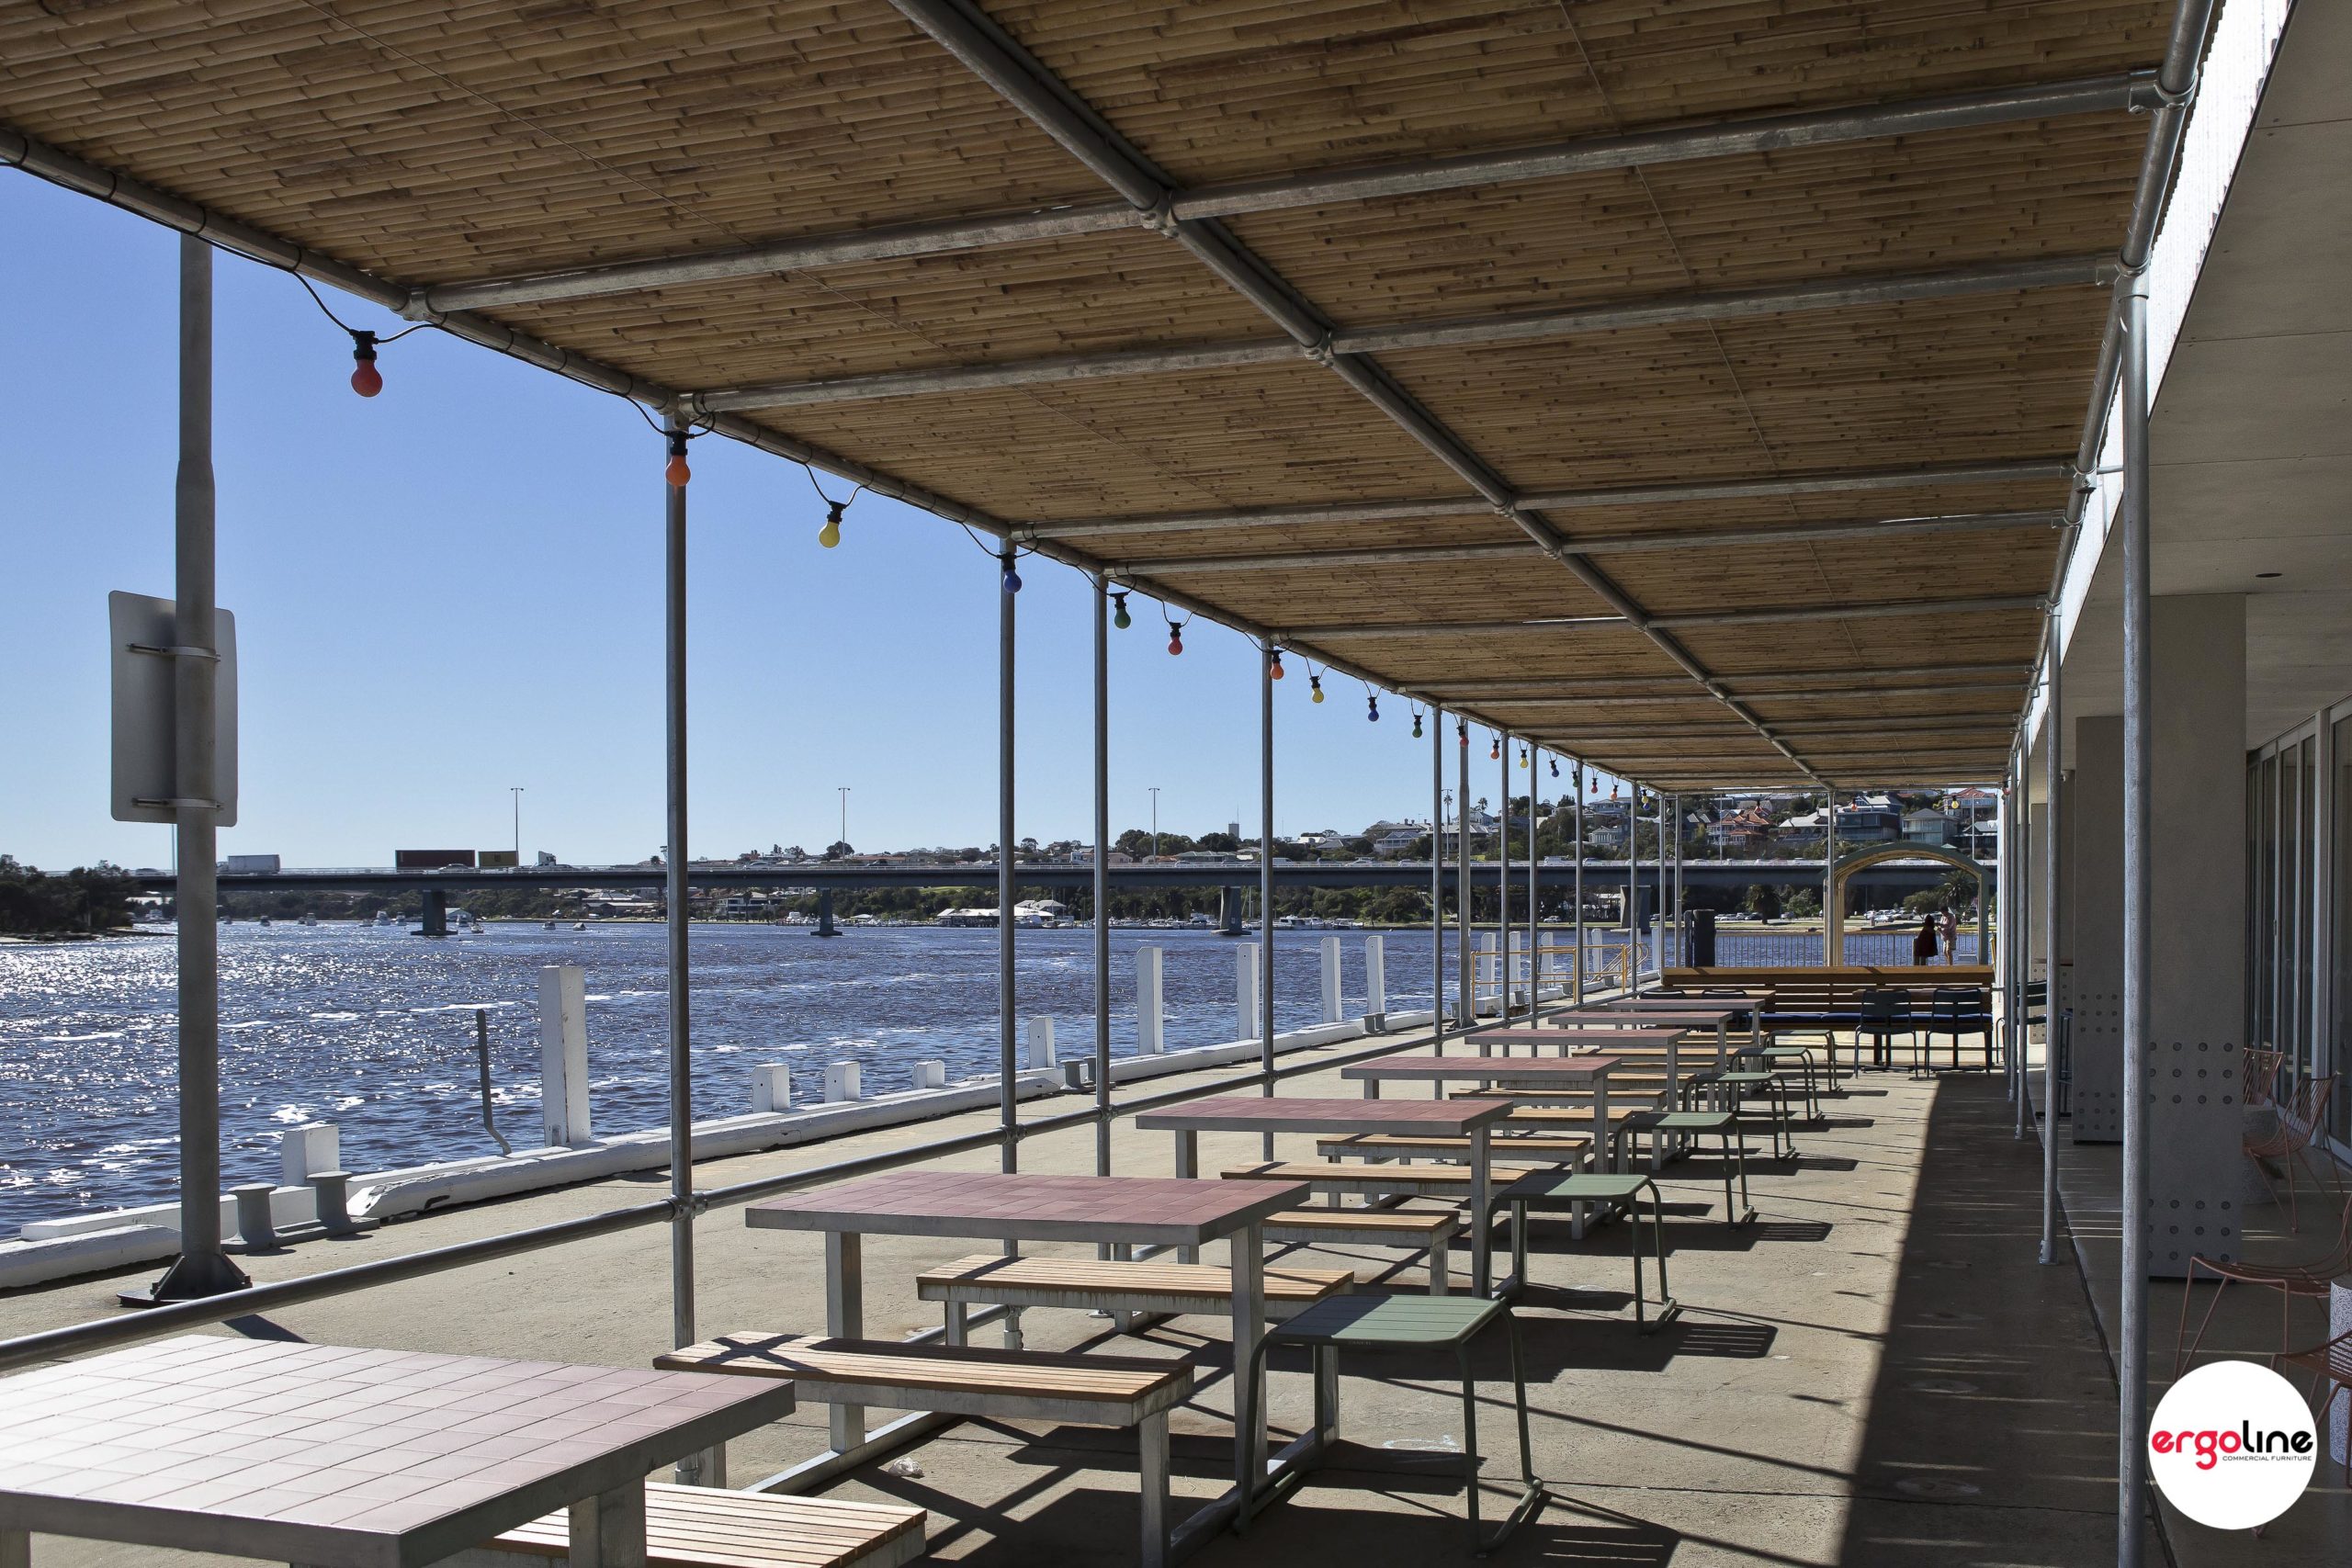 Feature Project - Jetty Bar & Eats Fremantle - News - Ergoline Furniture